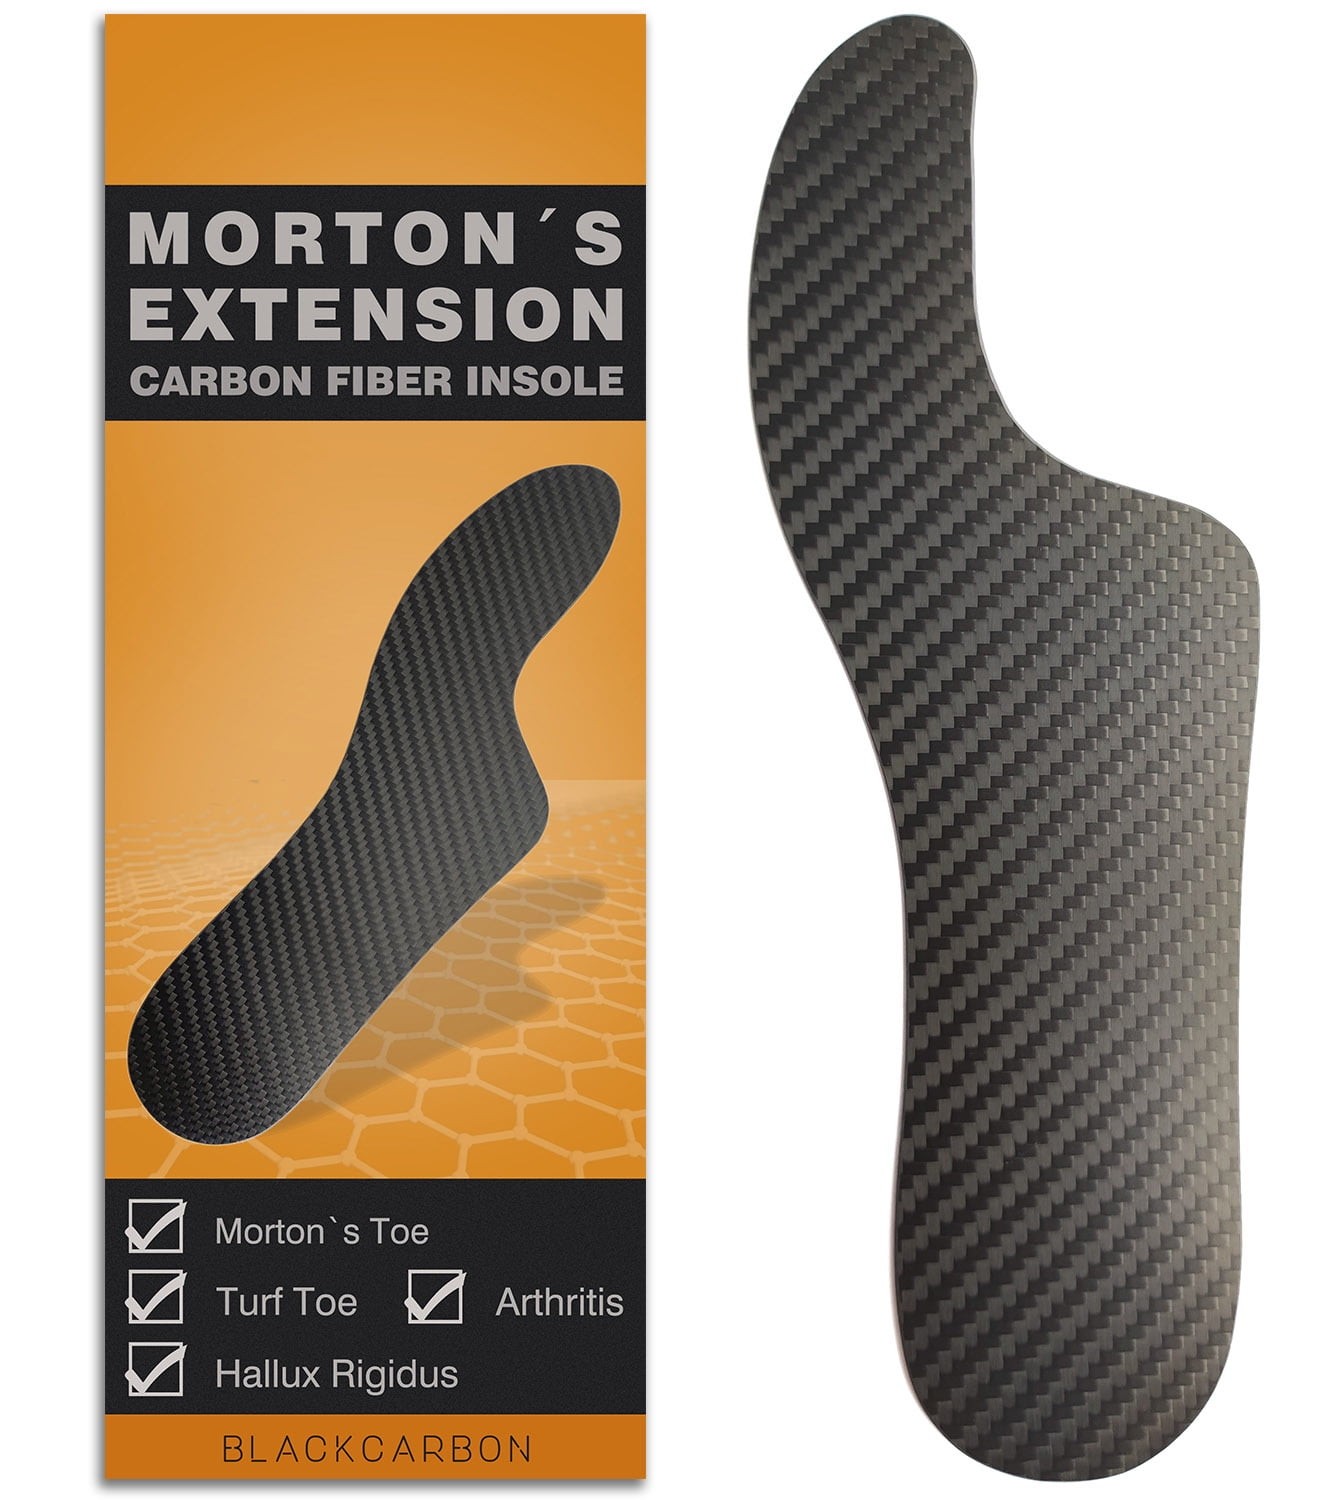 1 Piece Morton's Extension Orthotic,Carbon Fiber Insole,Rigid Foot ...